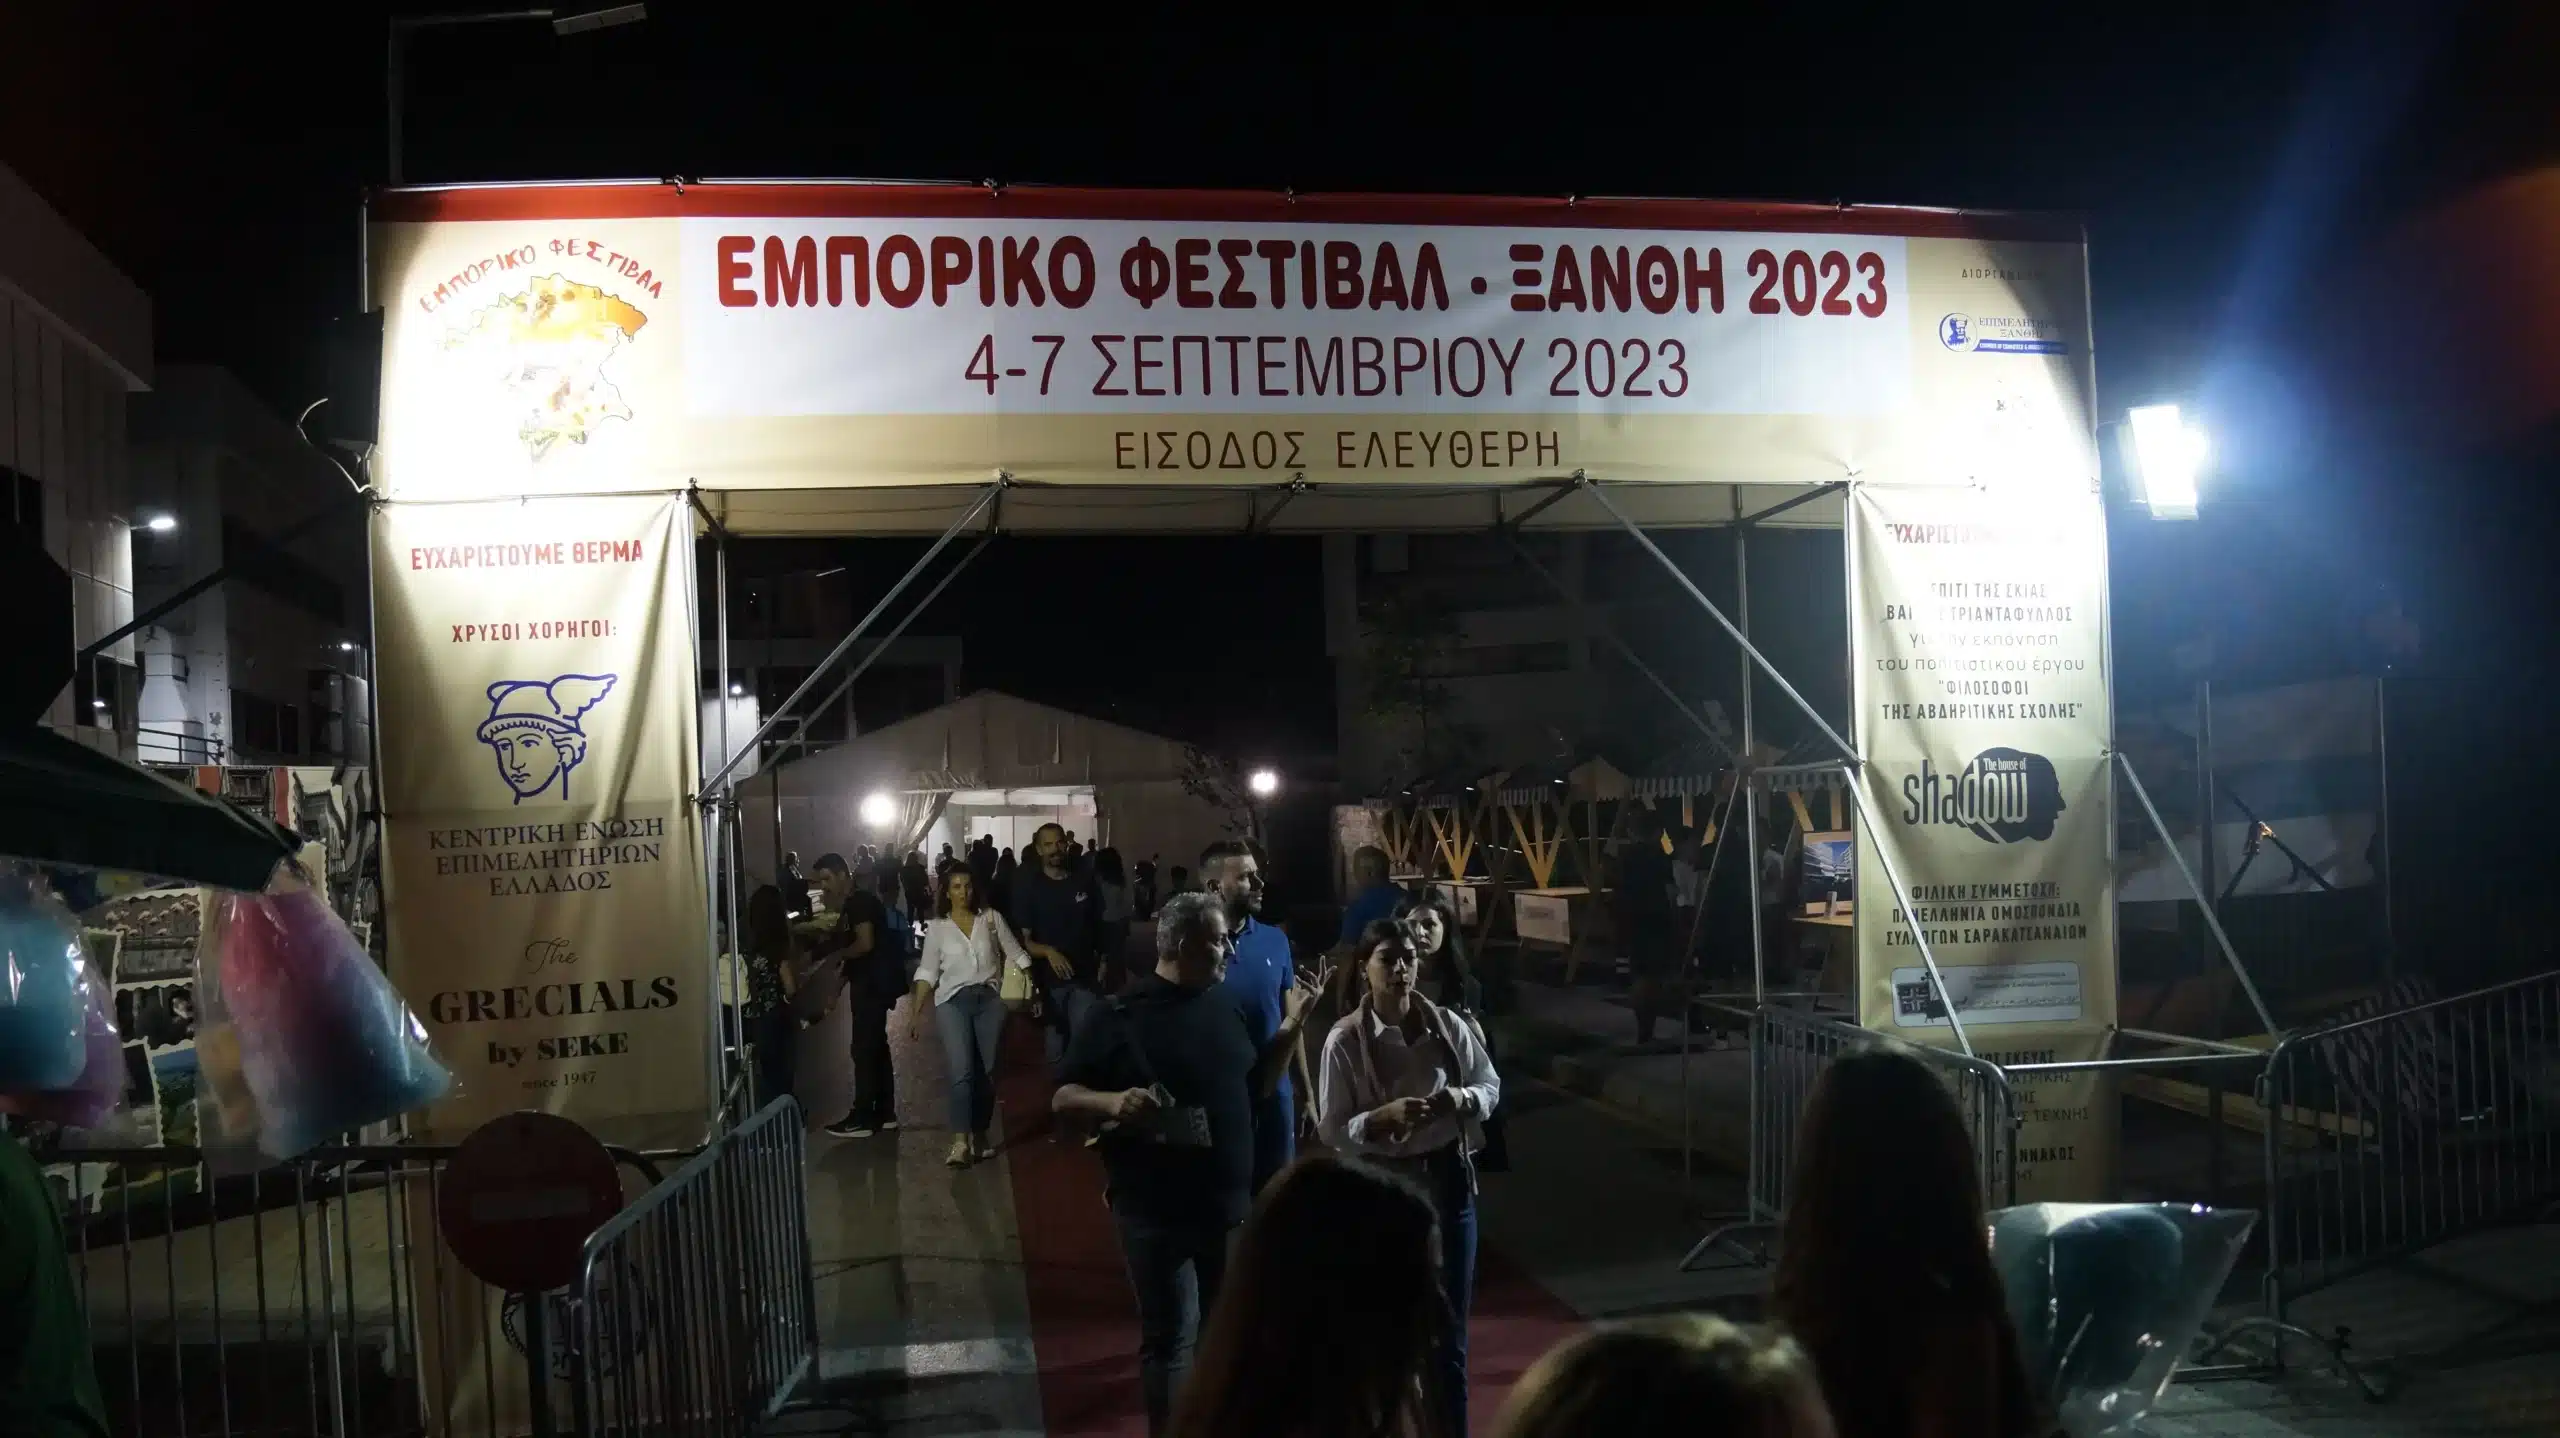 Marque festival - Xanthi 2023